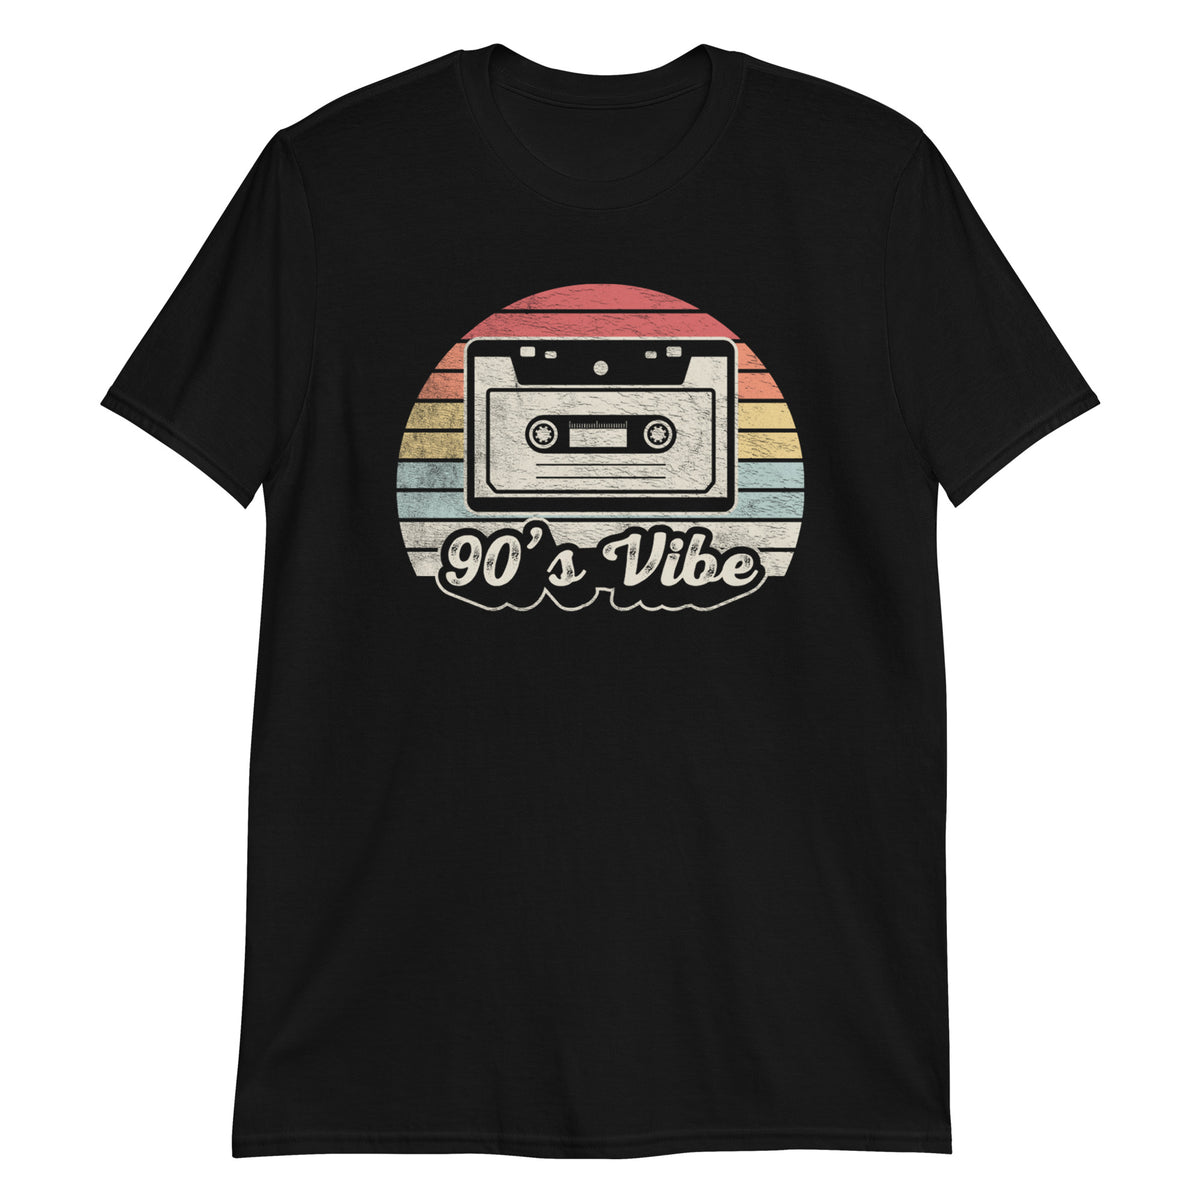 90s Vibes T-Shirt